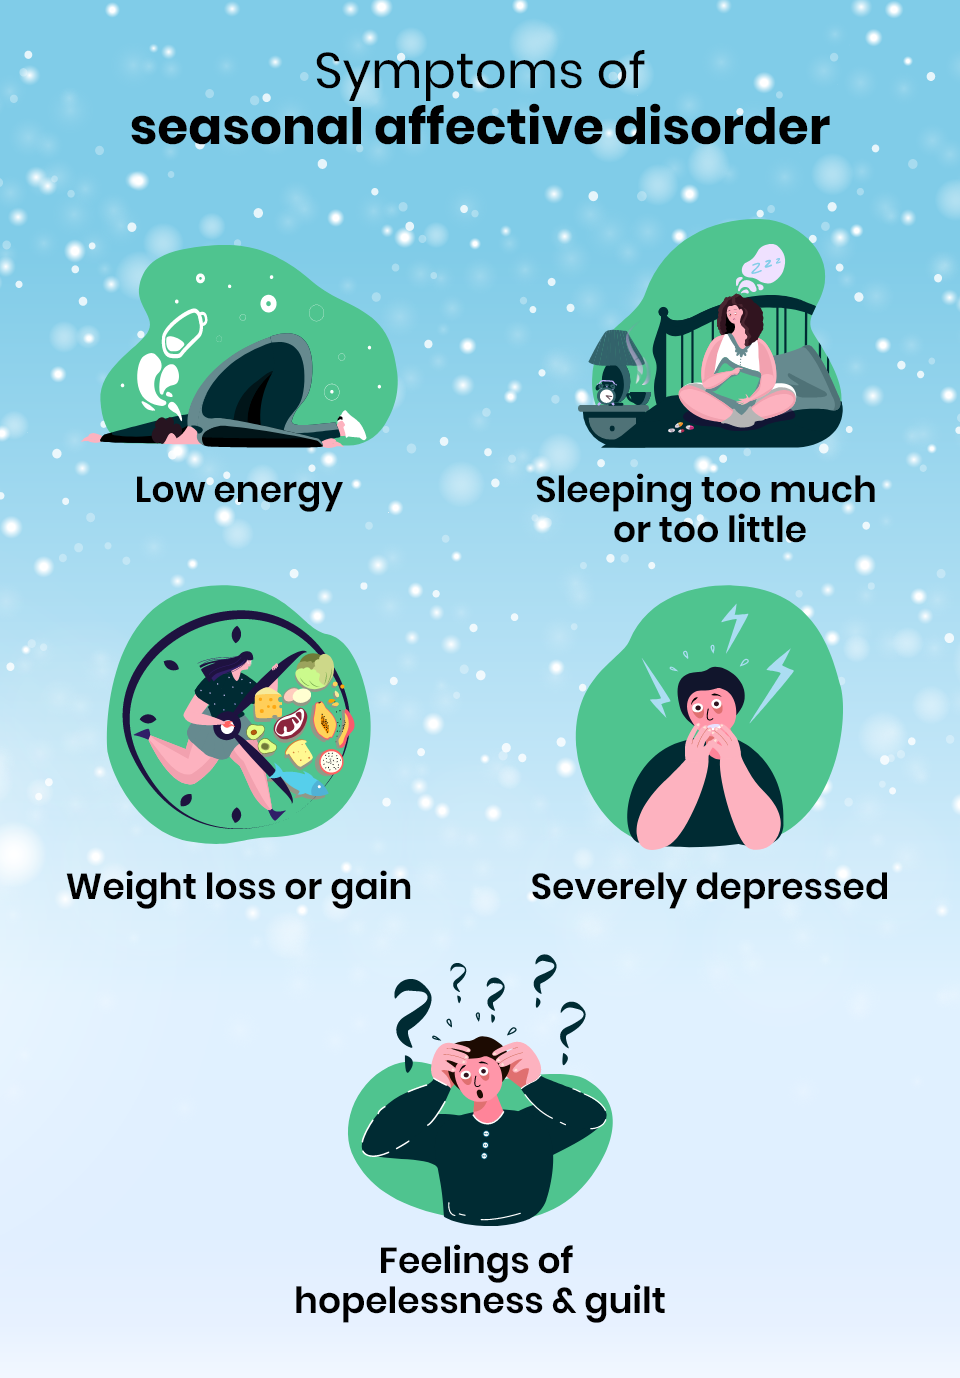 Symptoms of seasonal affective disorder